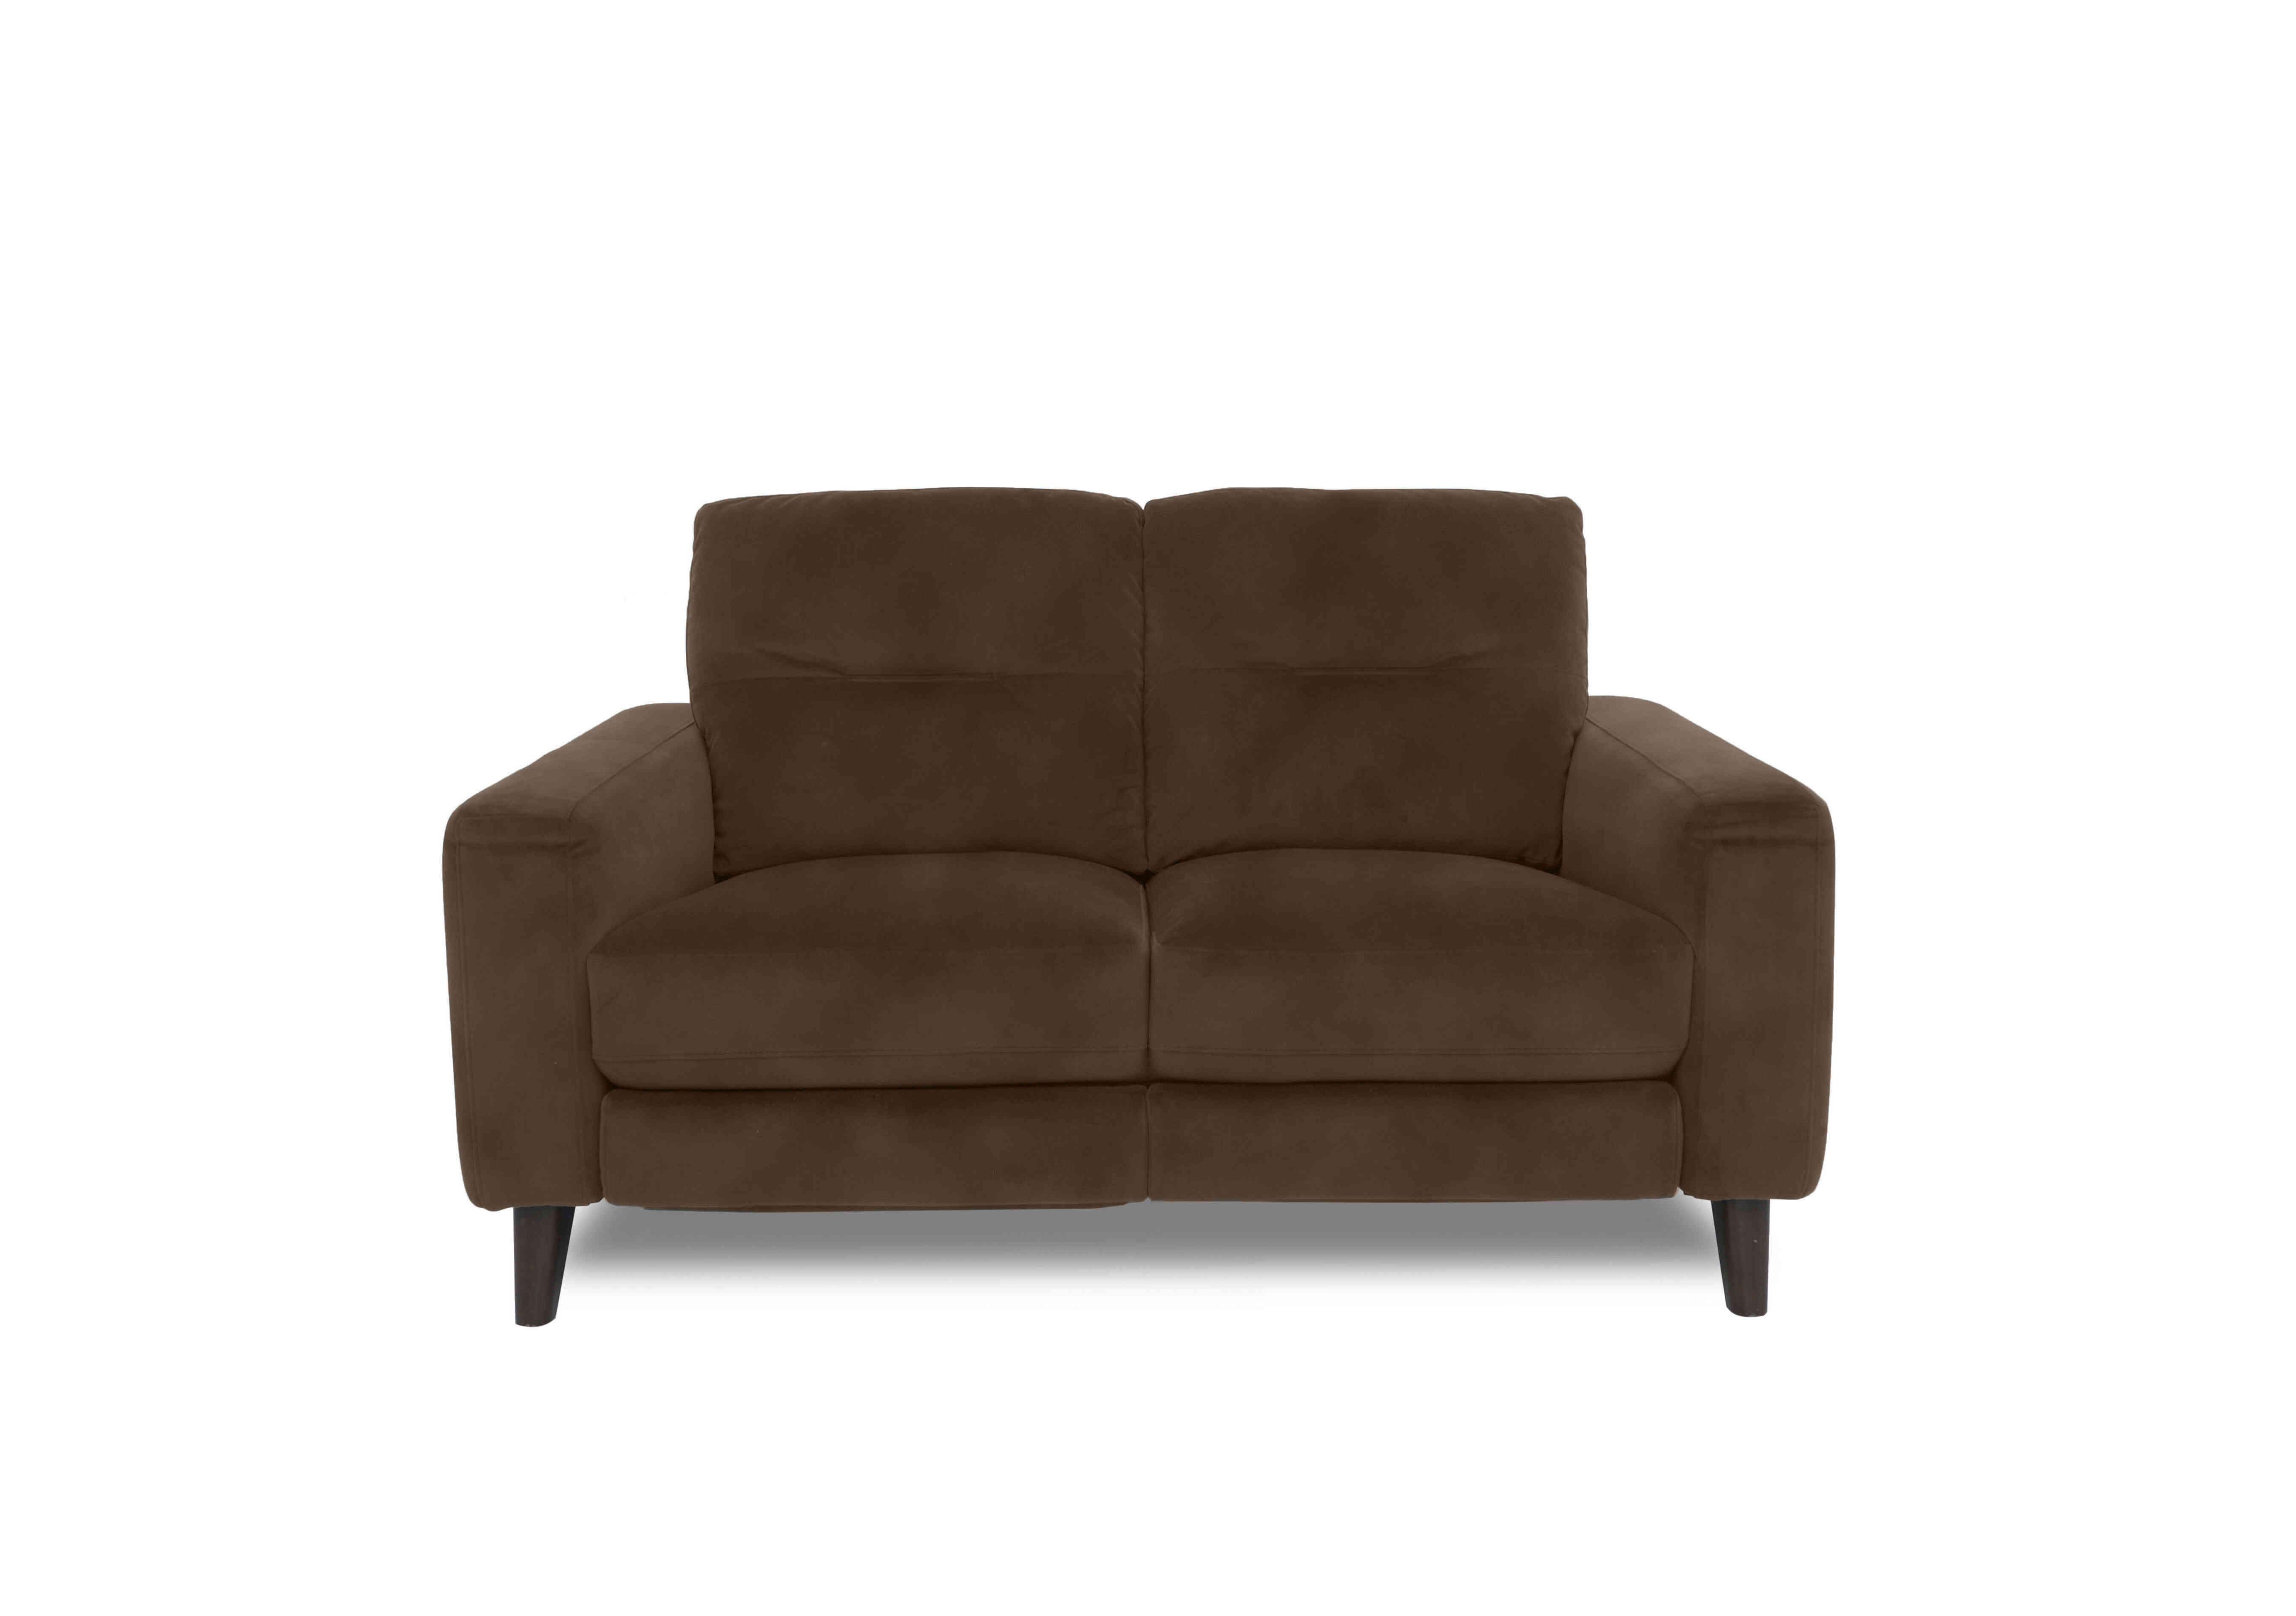 Jules 2 Seater Fabric Sofa in Sfa-Pey-R04 Dark Chocolate on Furniture Village